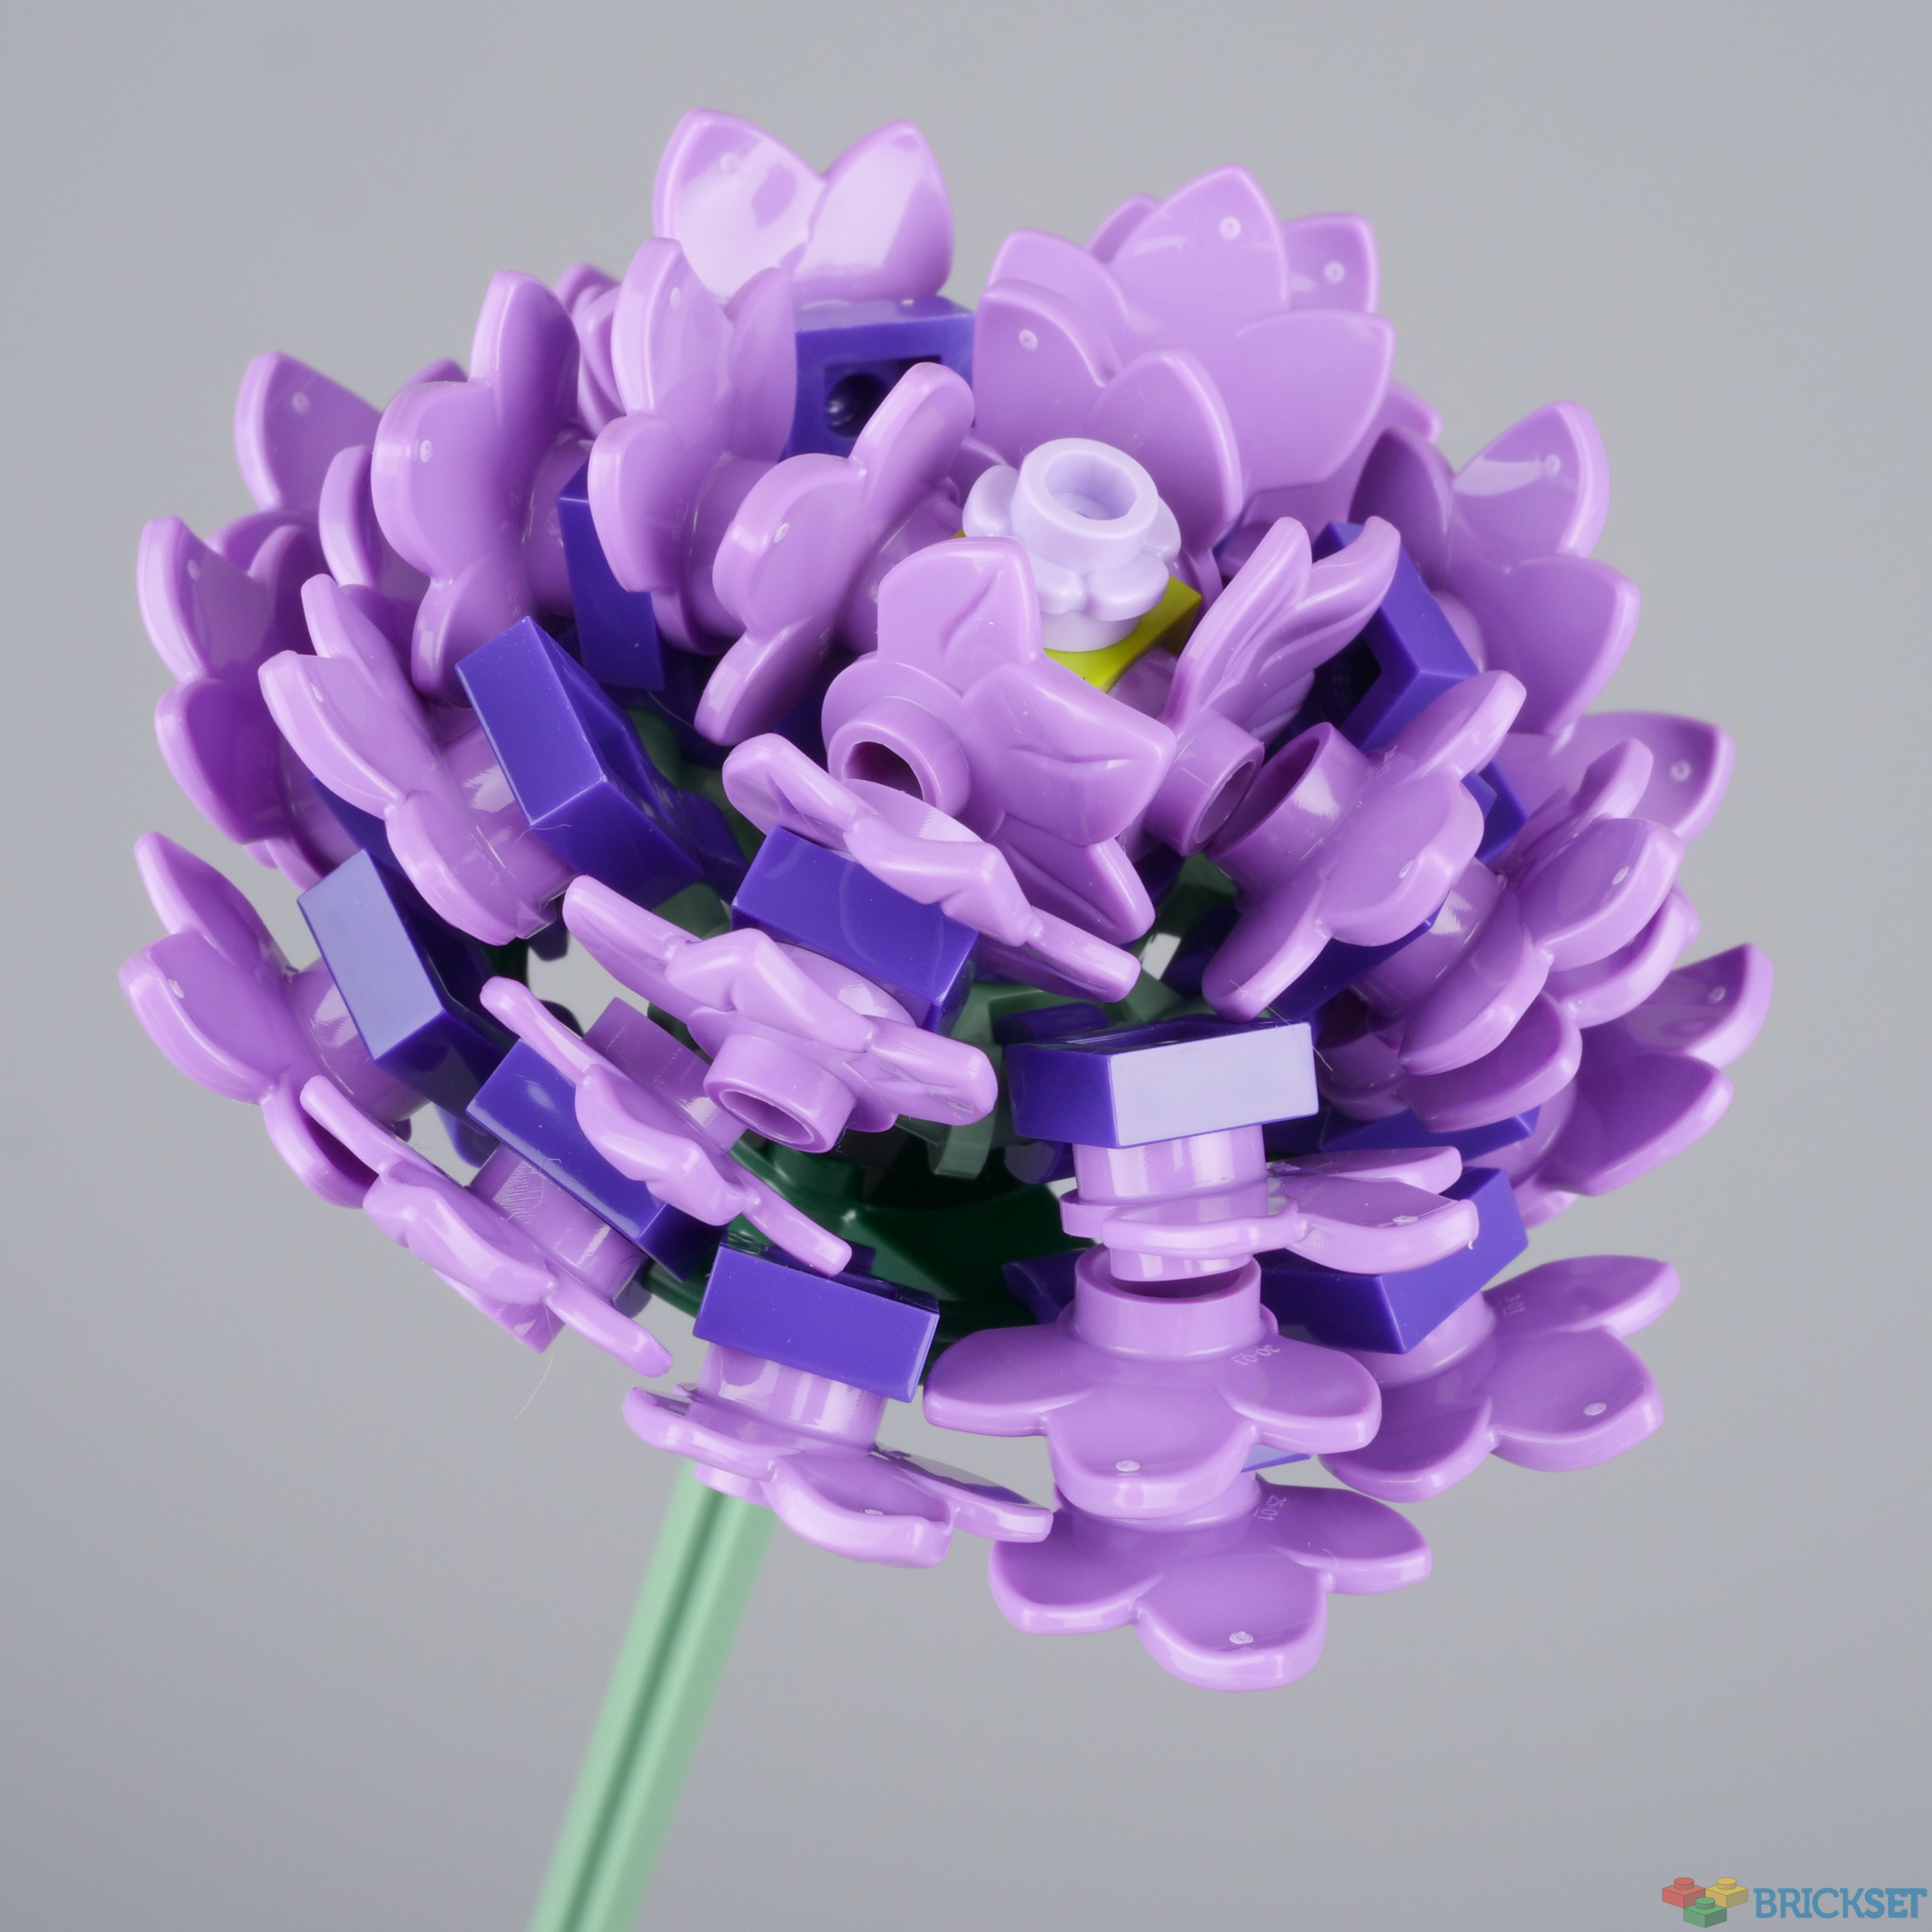 Albums 101+ Wallpaper Lego Icons Flower Bouquet 10280 Building Set For ...